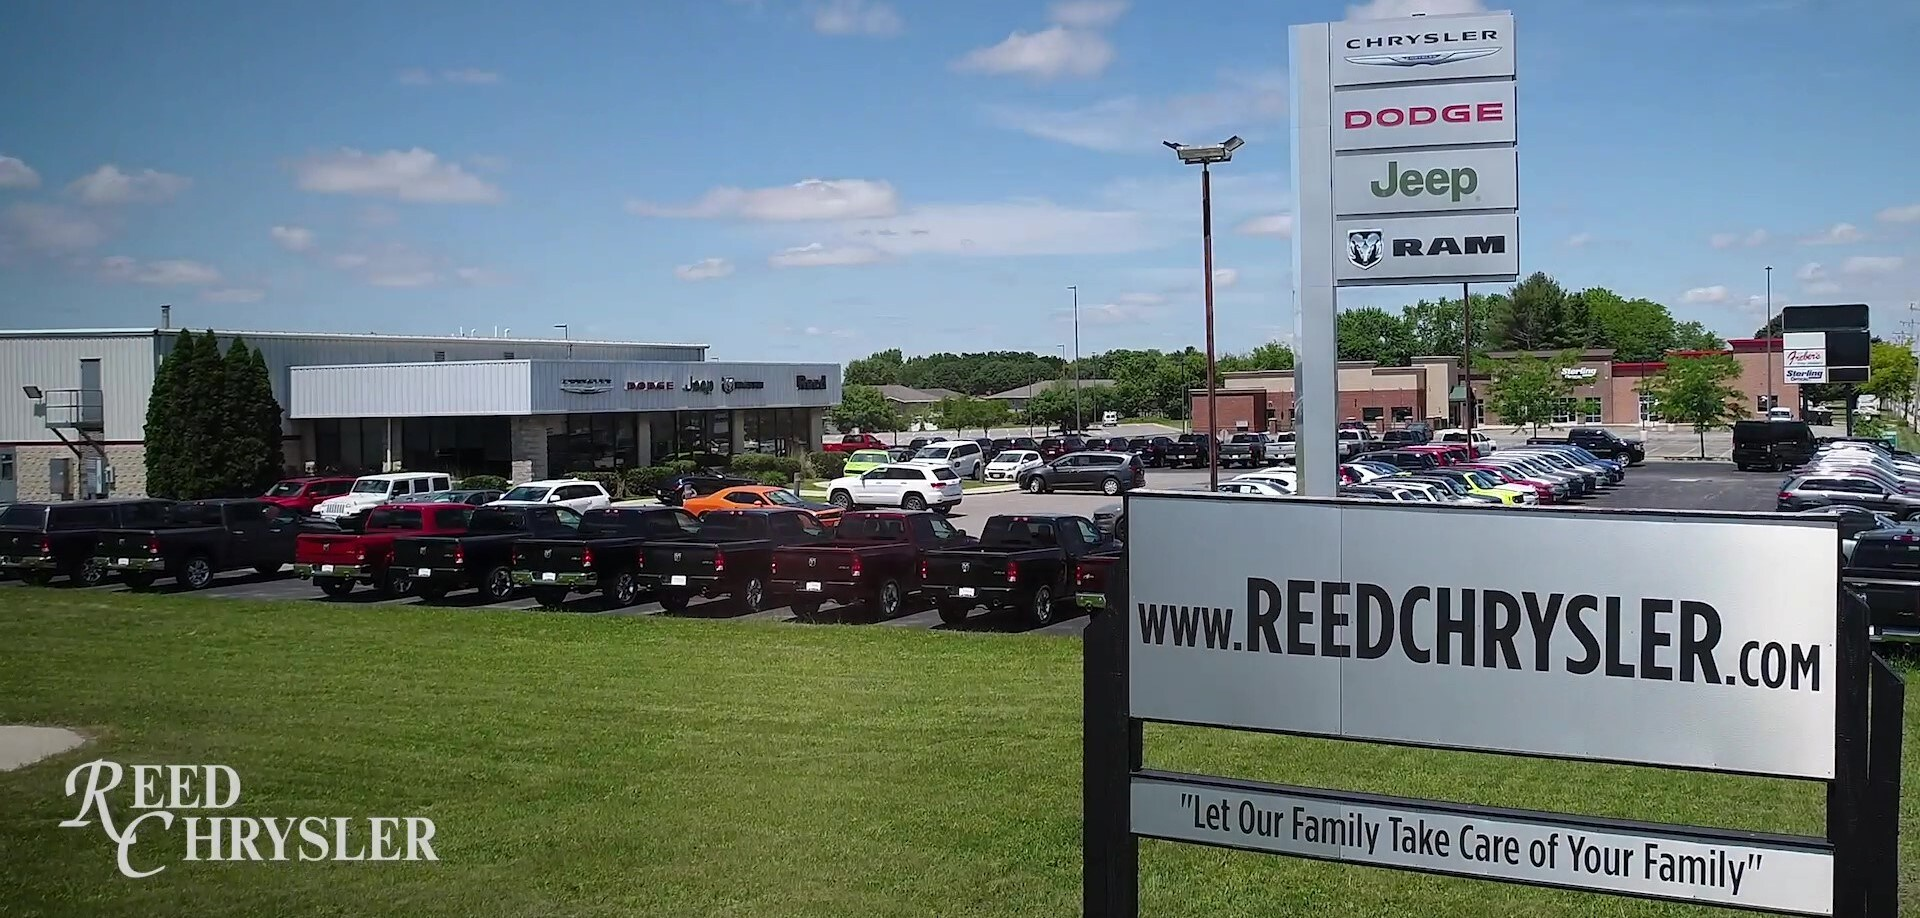 Reed Chrysler Dodge Jeep Ram, Inc.